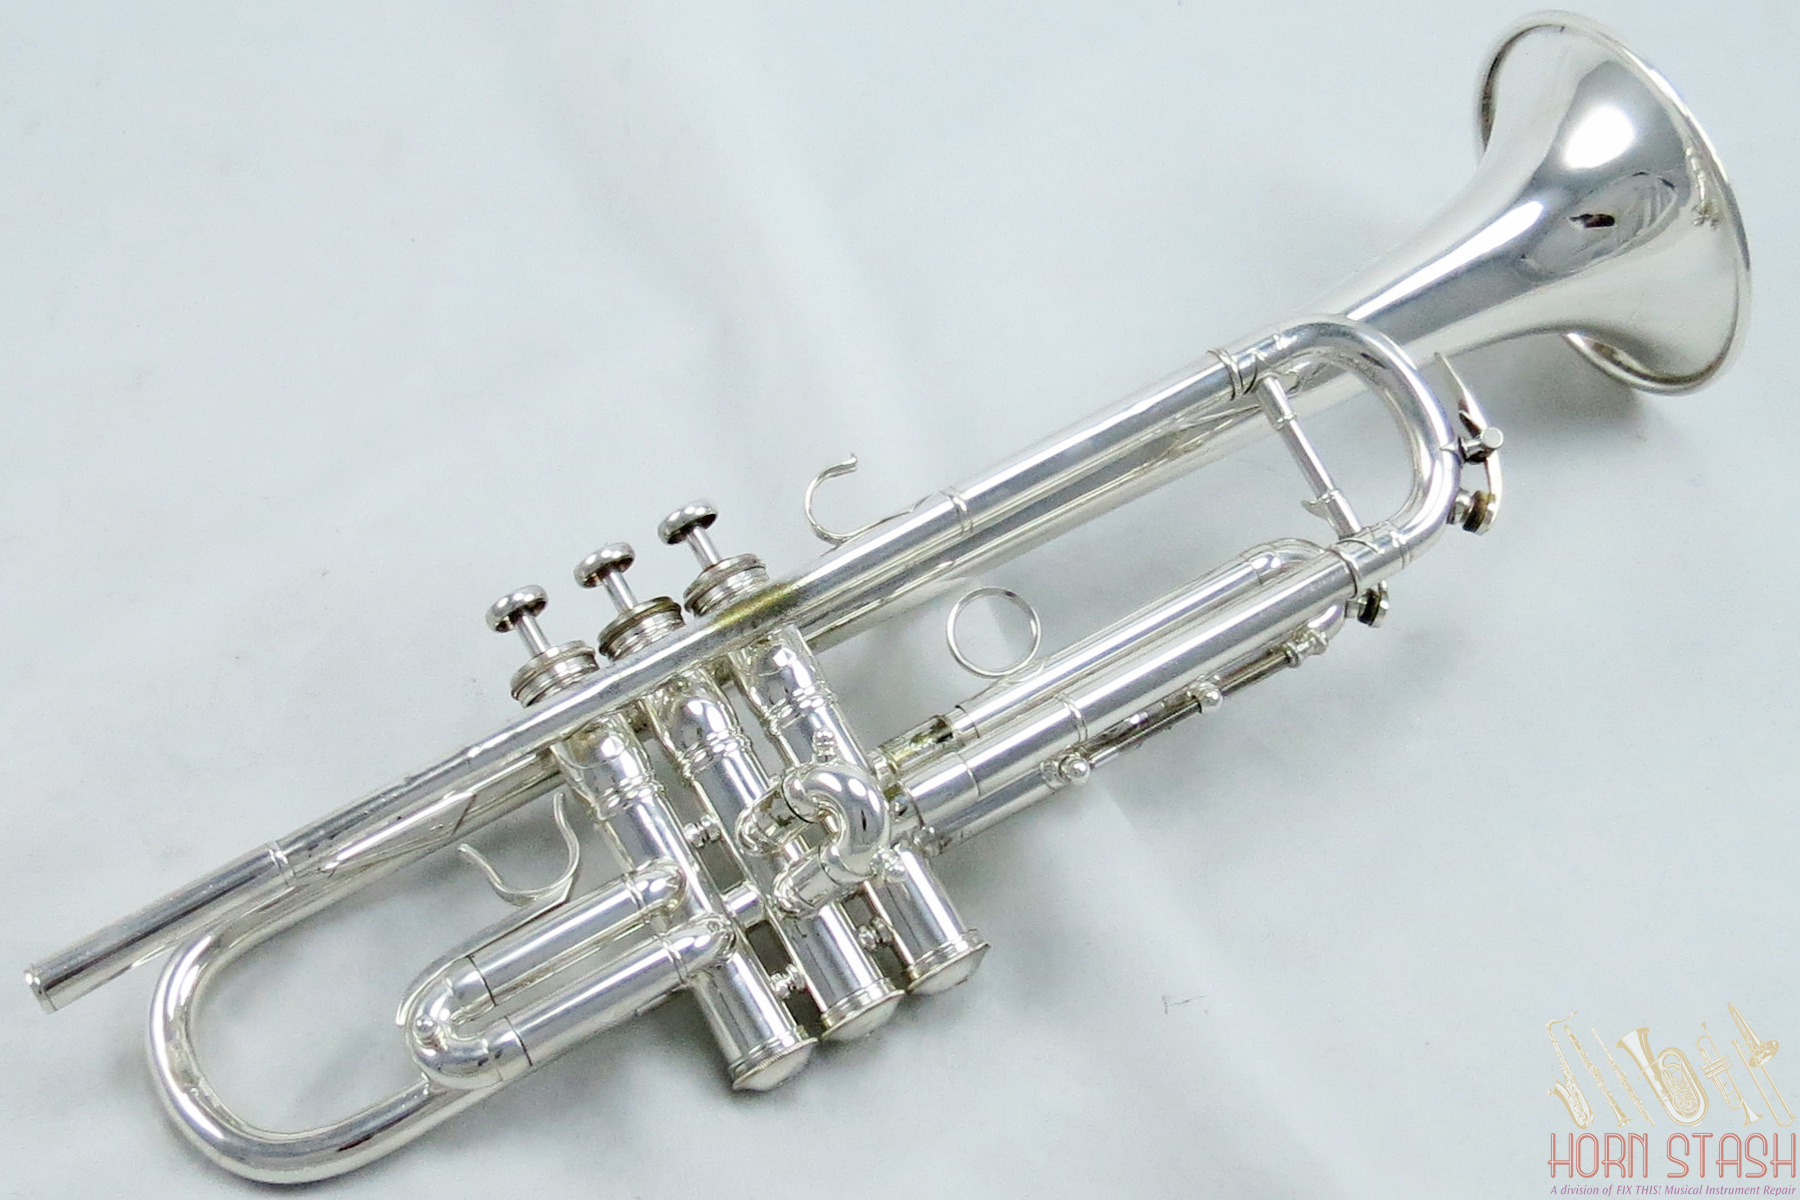 Besson Used Besson MEHA Bb Trumpet - 1024XX